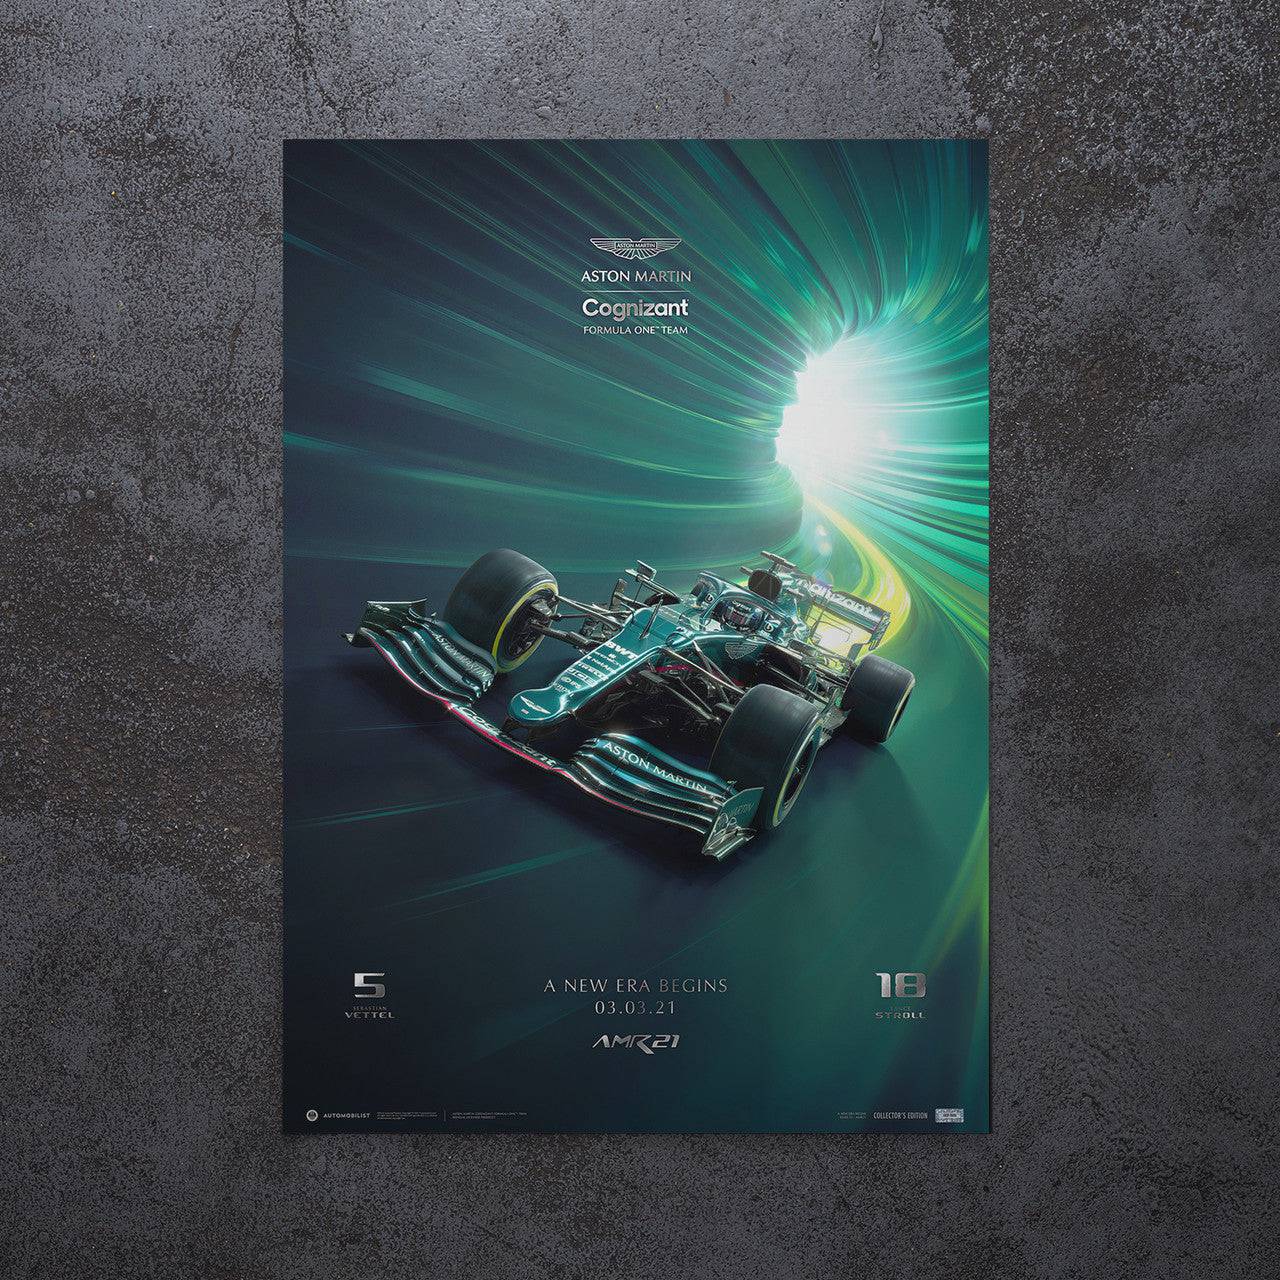 Aston Martin Cognizant Formula One™ Team - A New Era Begins - 2021 | Collector’s Edition